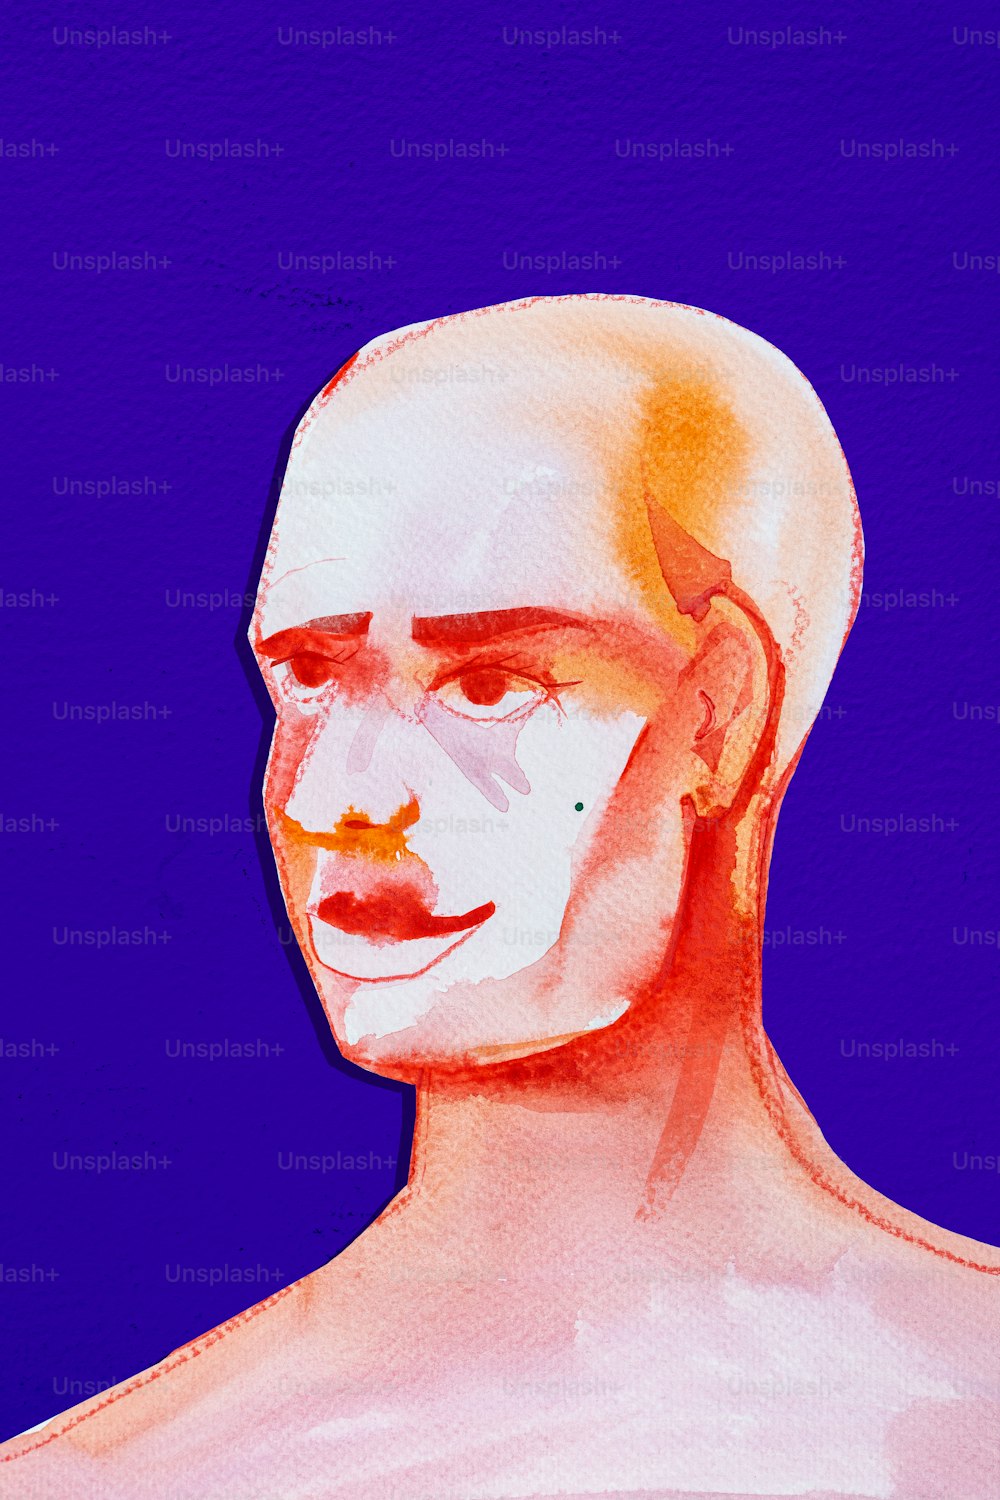 Illustration of Human Head in watercolor technique